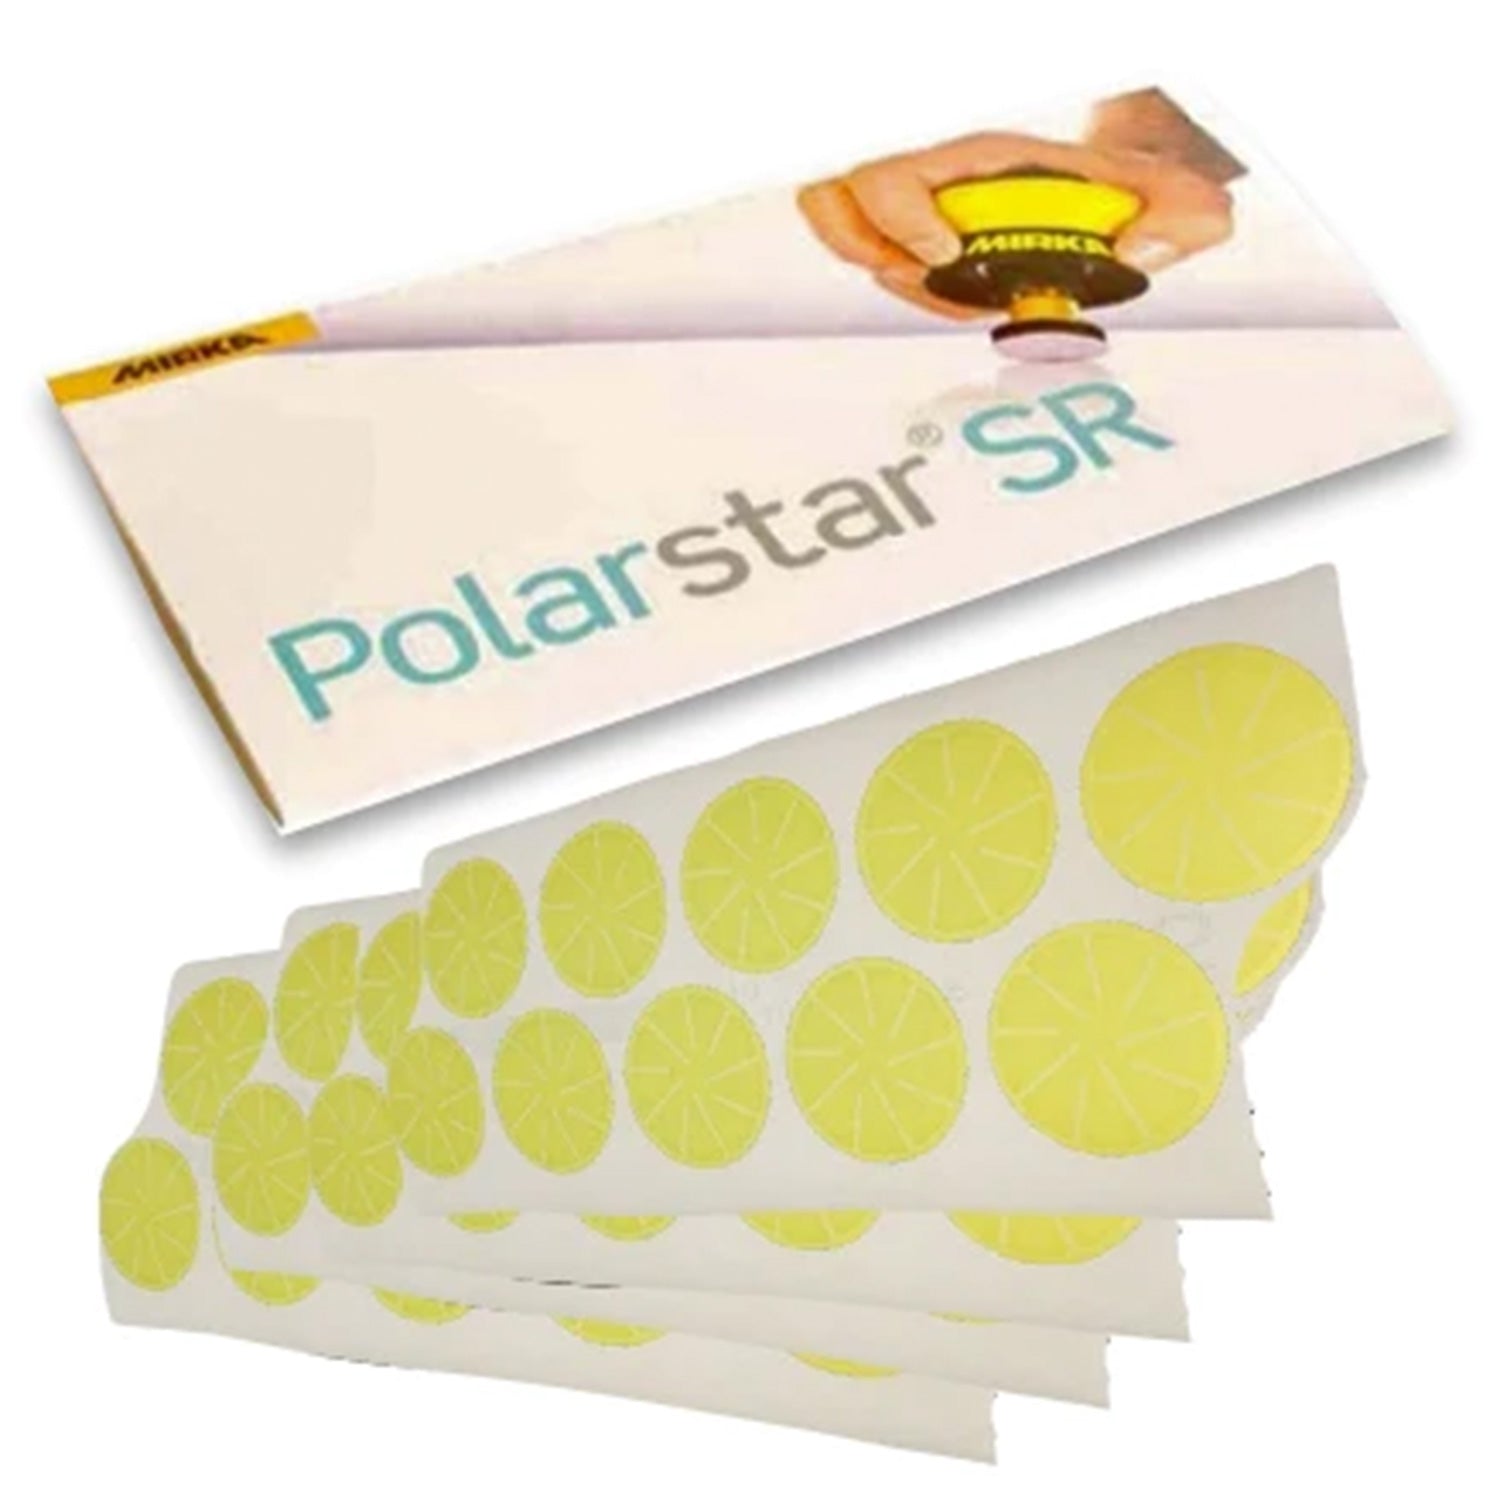 mirka-sr-301-3A-yellow-5000-grit-polarstar-package